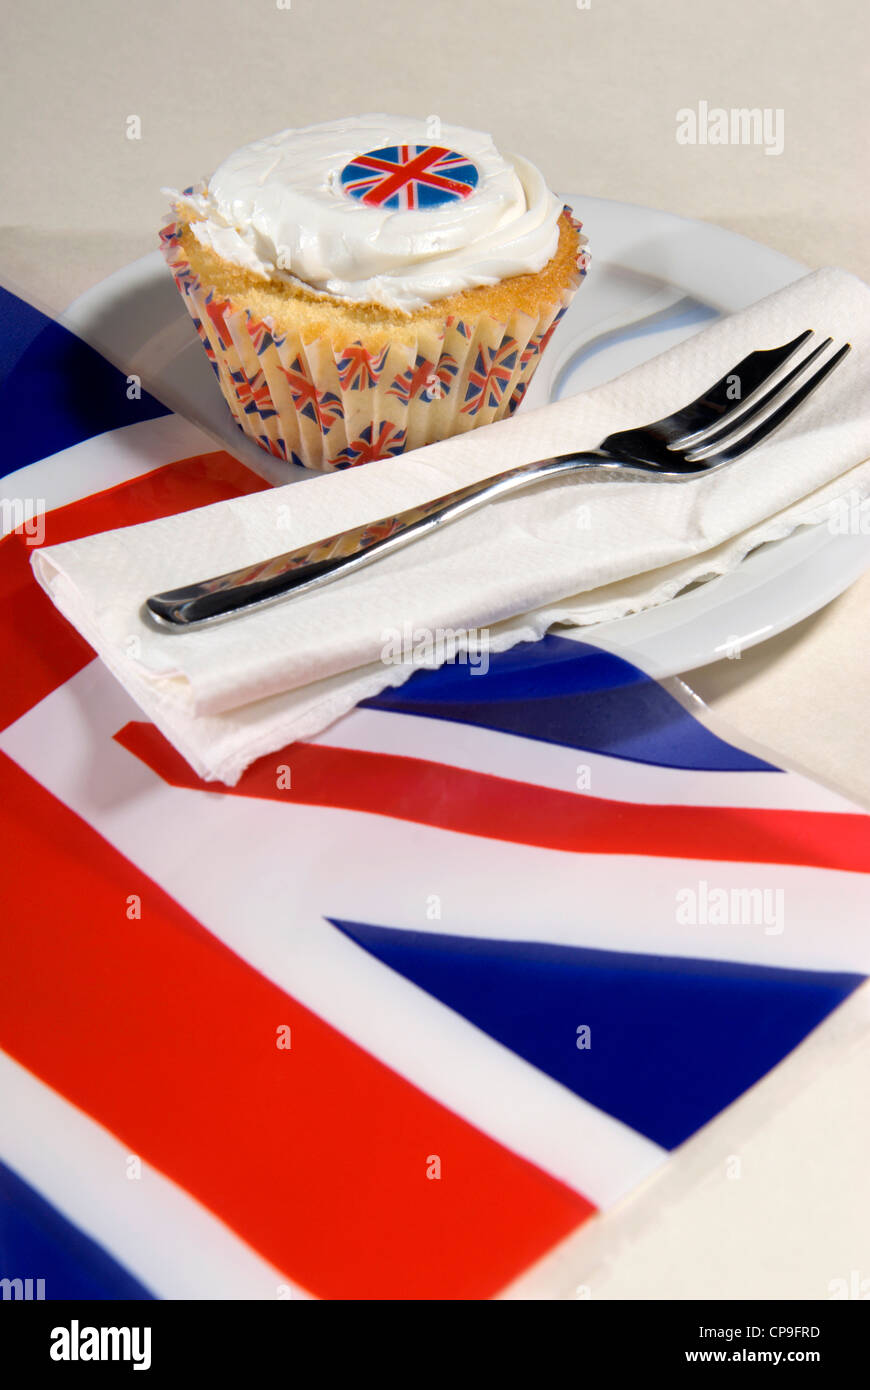 English cake | Jubilee cake, Cake designs birthday, Cool birthday cakes